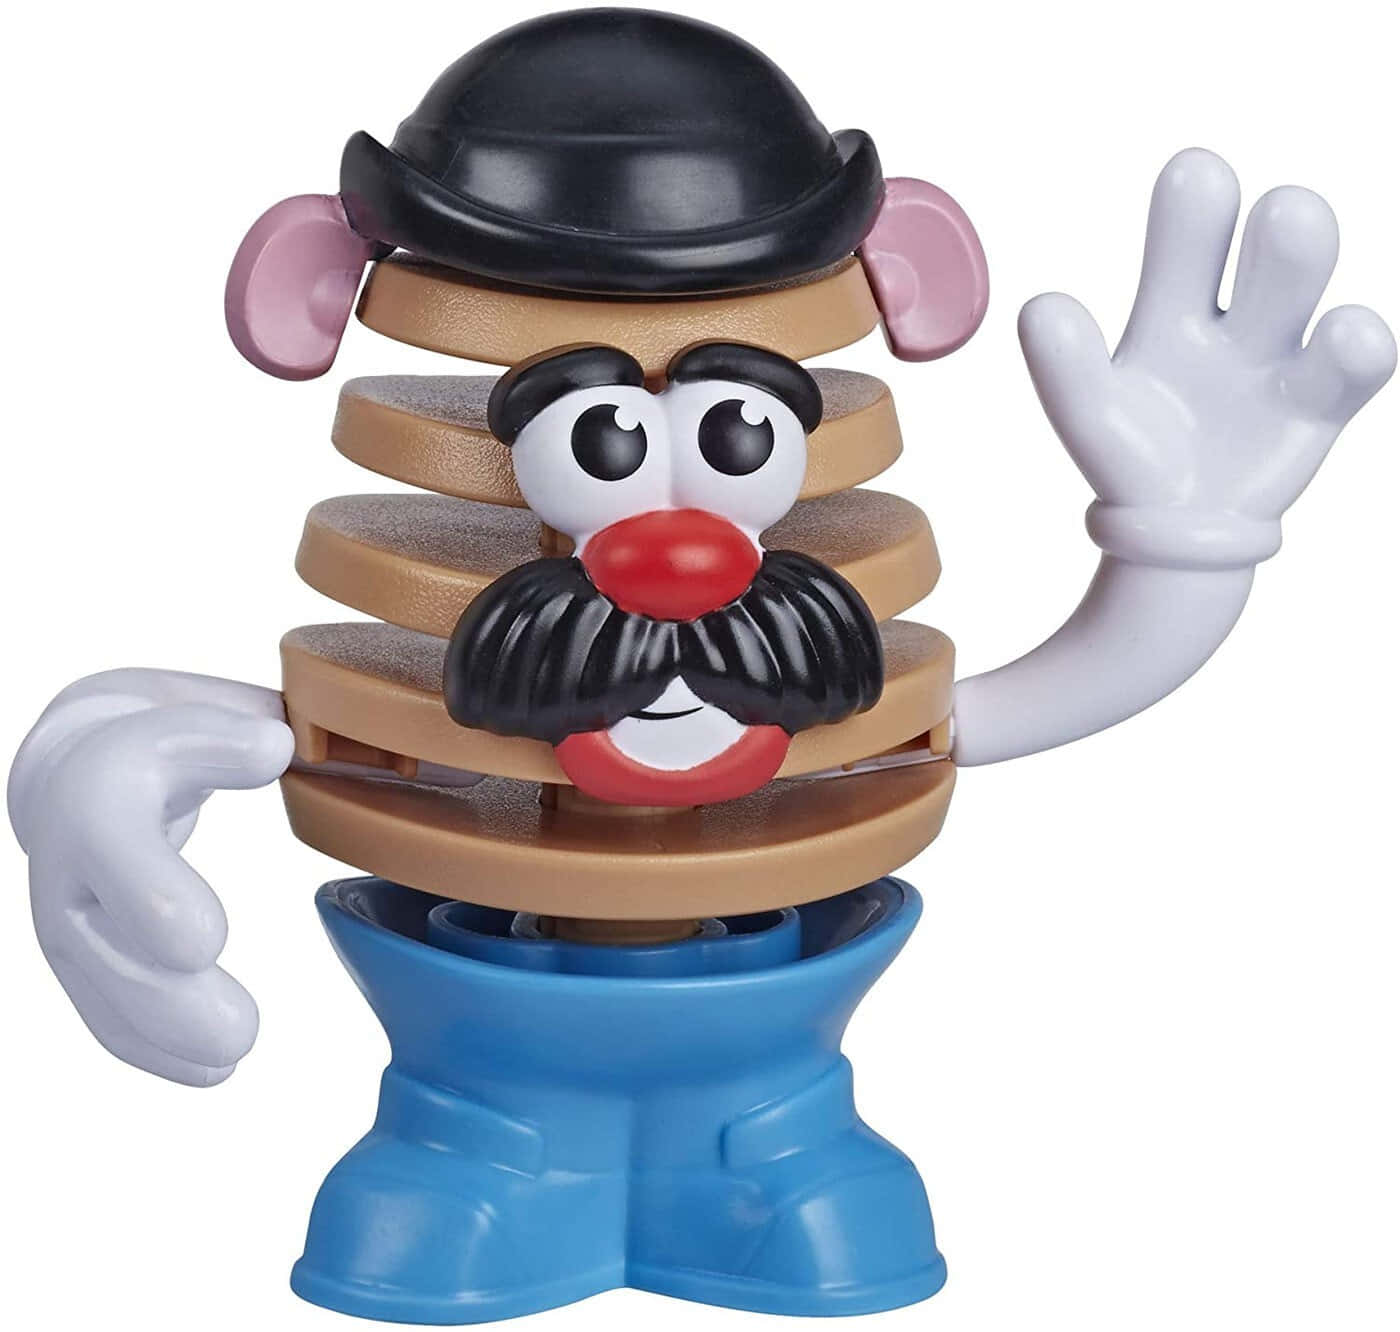 The Fun Face of Toys - Mr Potato Head